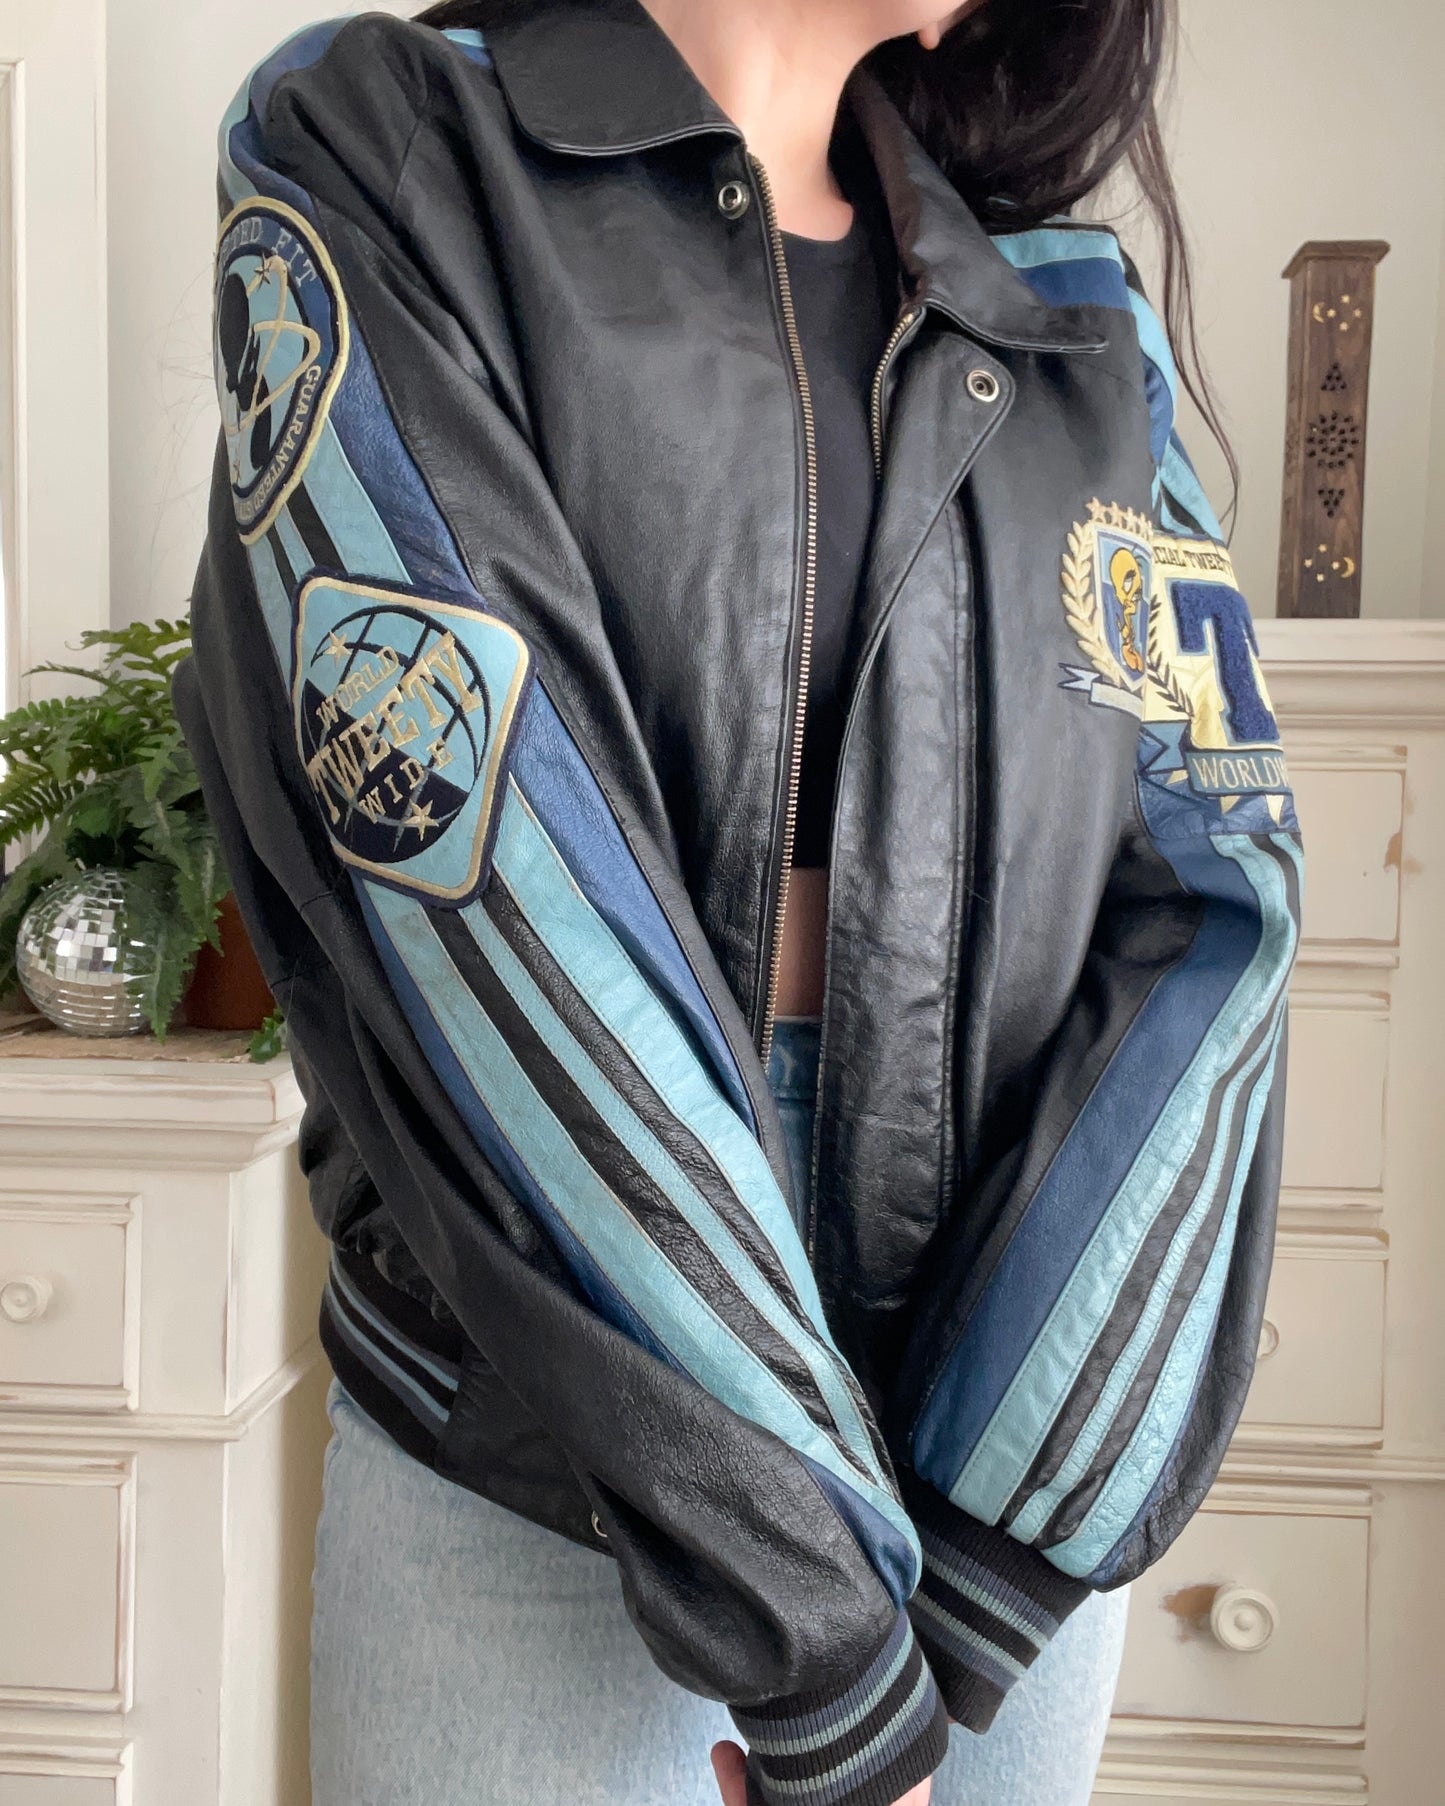 1998 Tweety Bird Leather Jacket